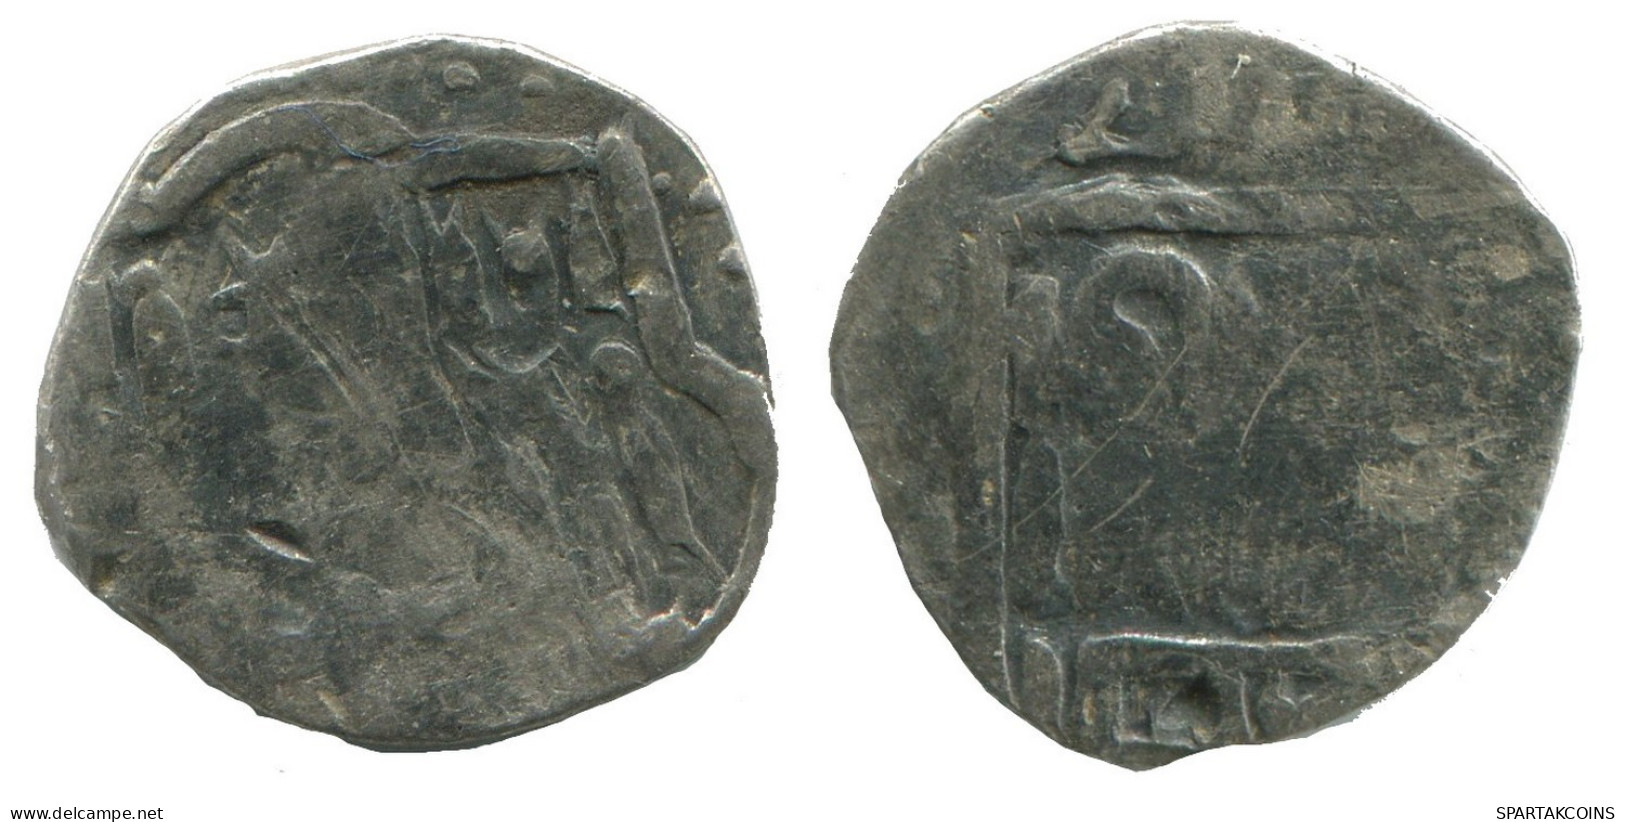 GOLDEN HORDE Silver Dirham Medieval Islamic Coin 1.1g/14mm #NNN2030.8.U.A - Islamische Münzen